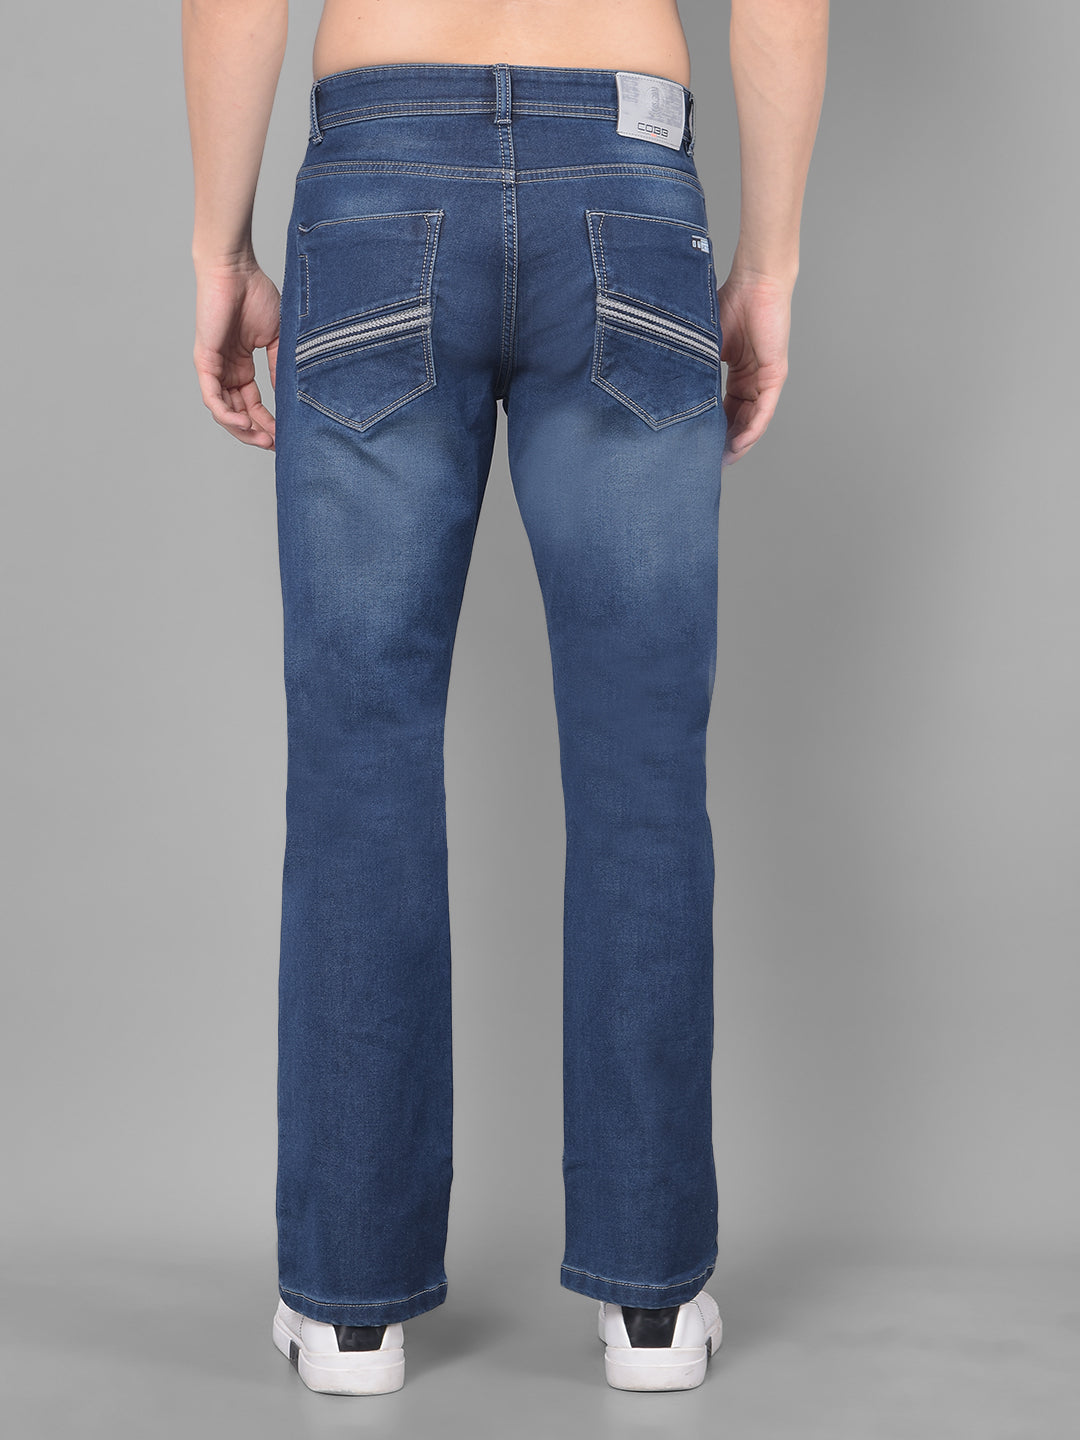 cobb blue boot cut jeans